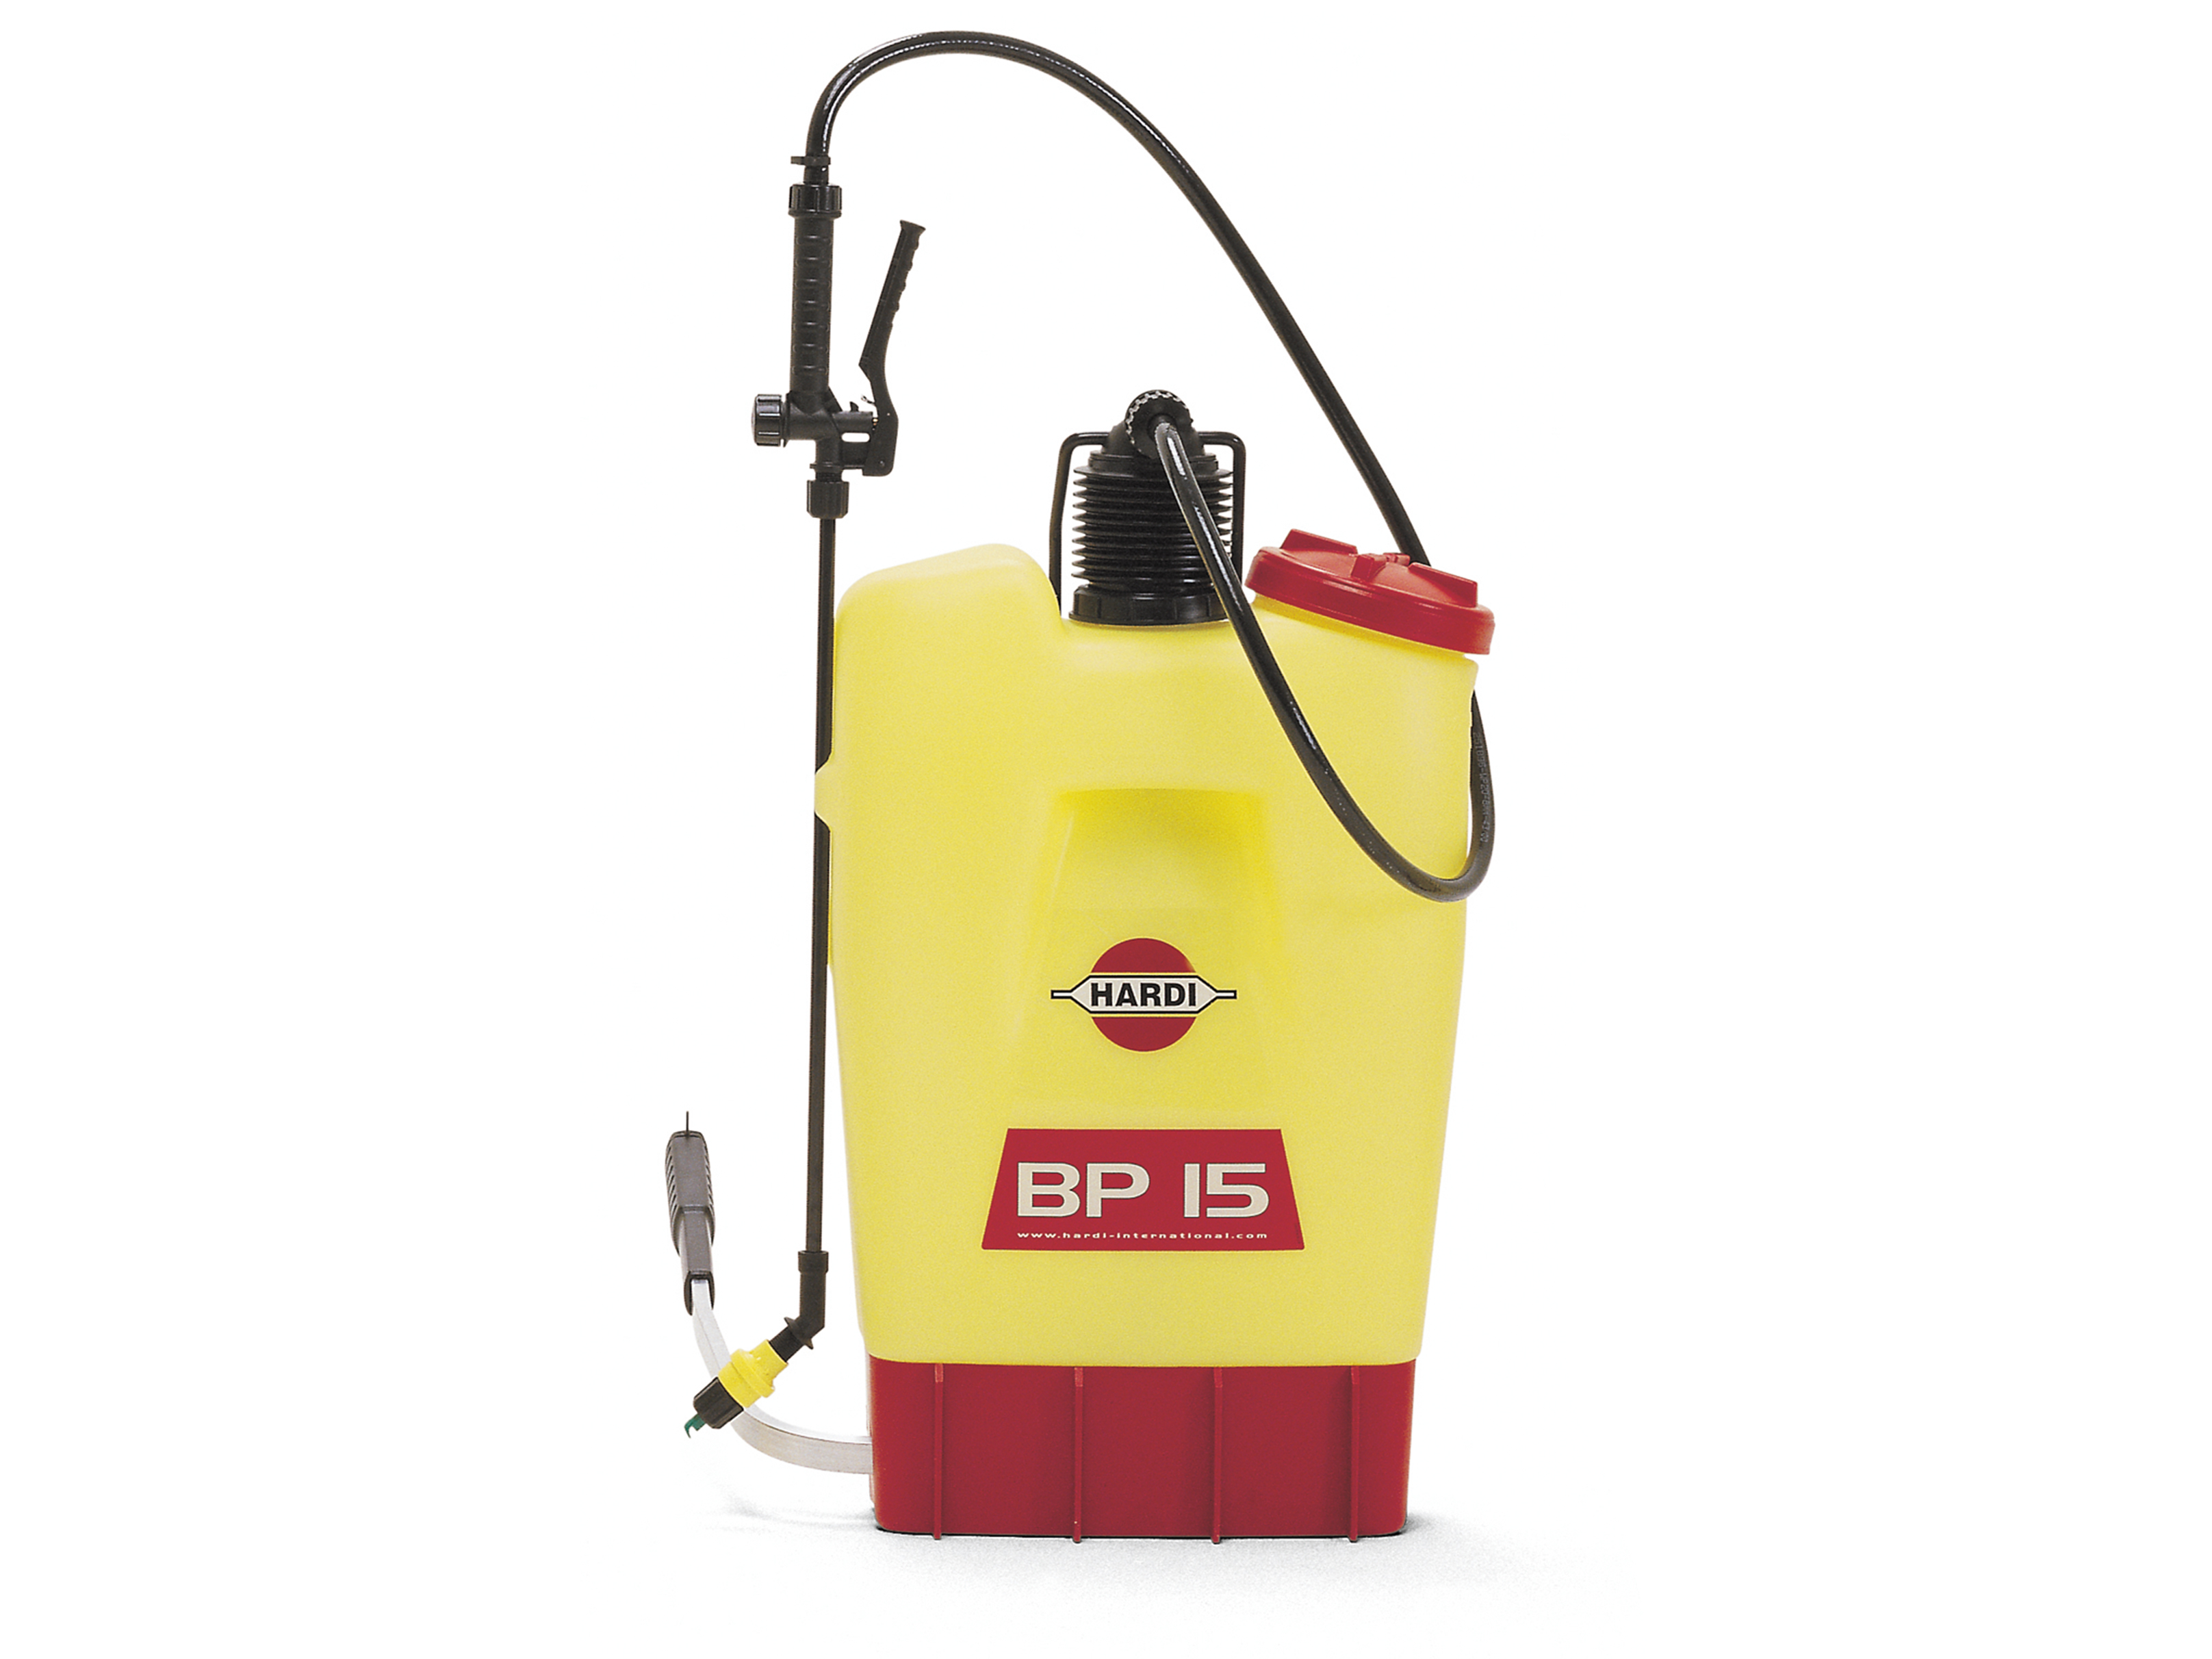 Hardi BP-15 Backpack Sprayer